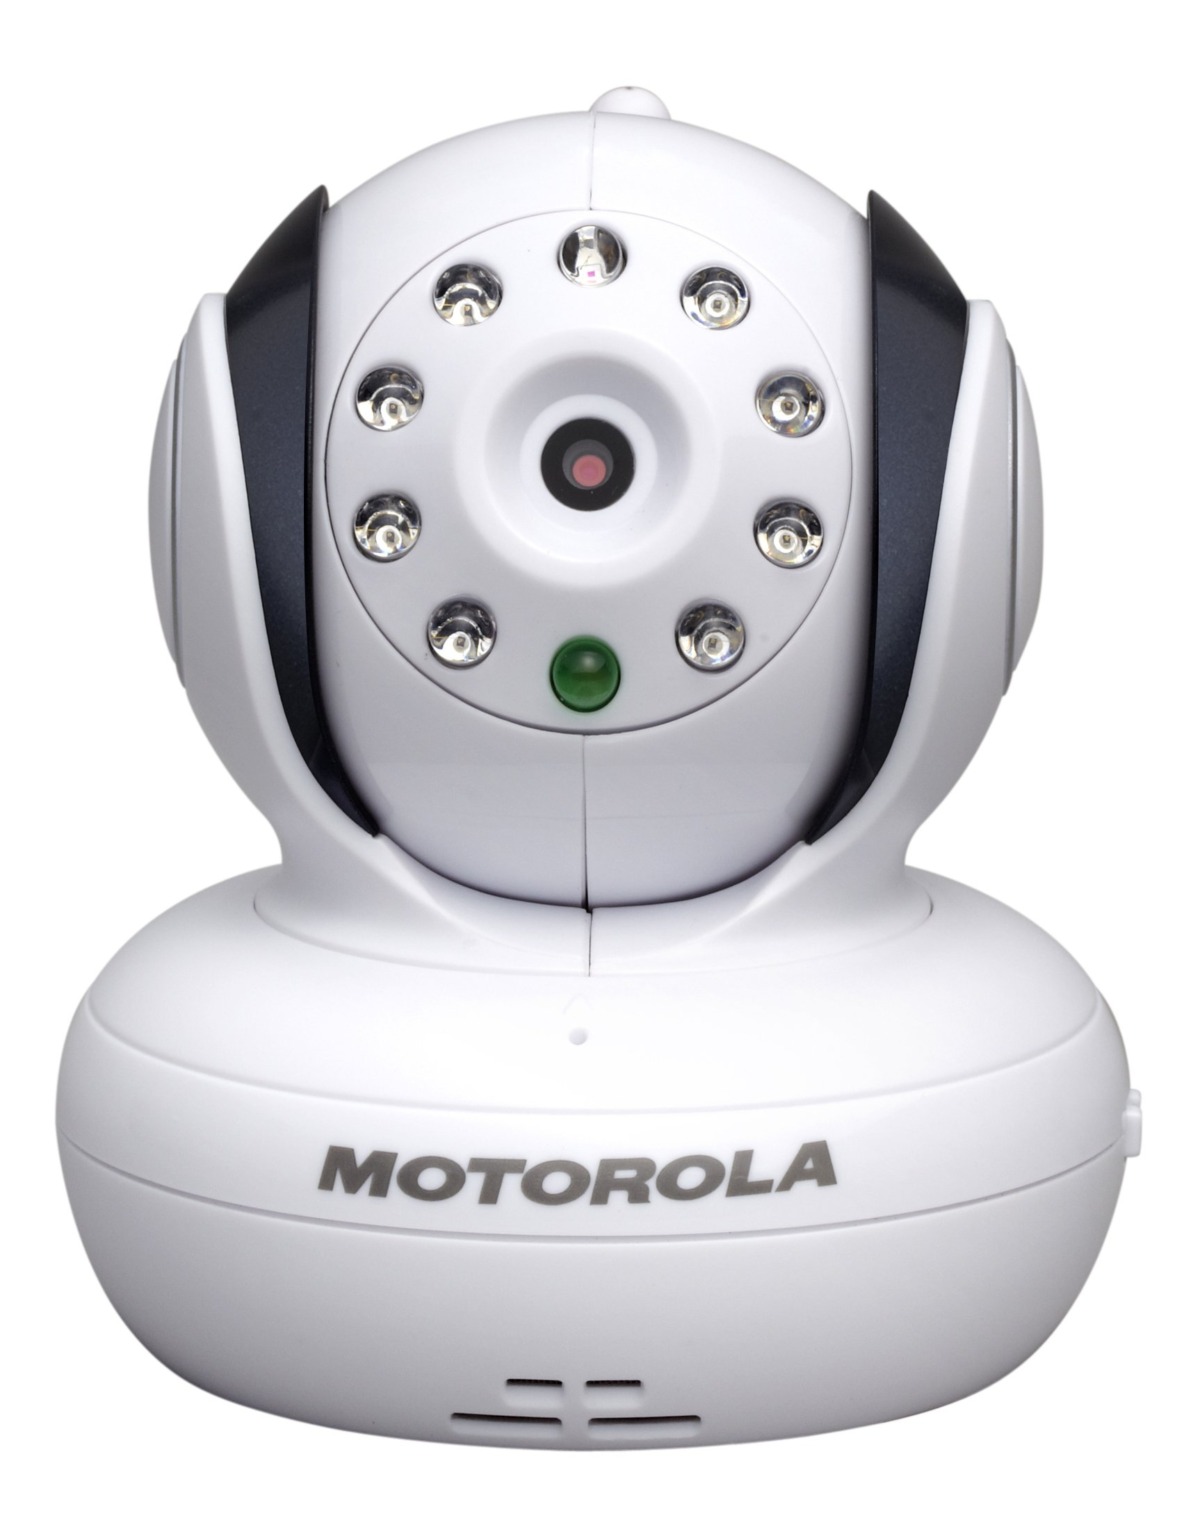 Motorola Additional Camera for Motorola MBP33 Baby Monitor | The Storepaperoomates Retail Market - Fast Affordable Shopping